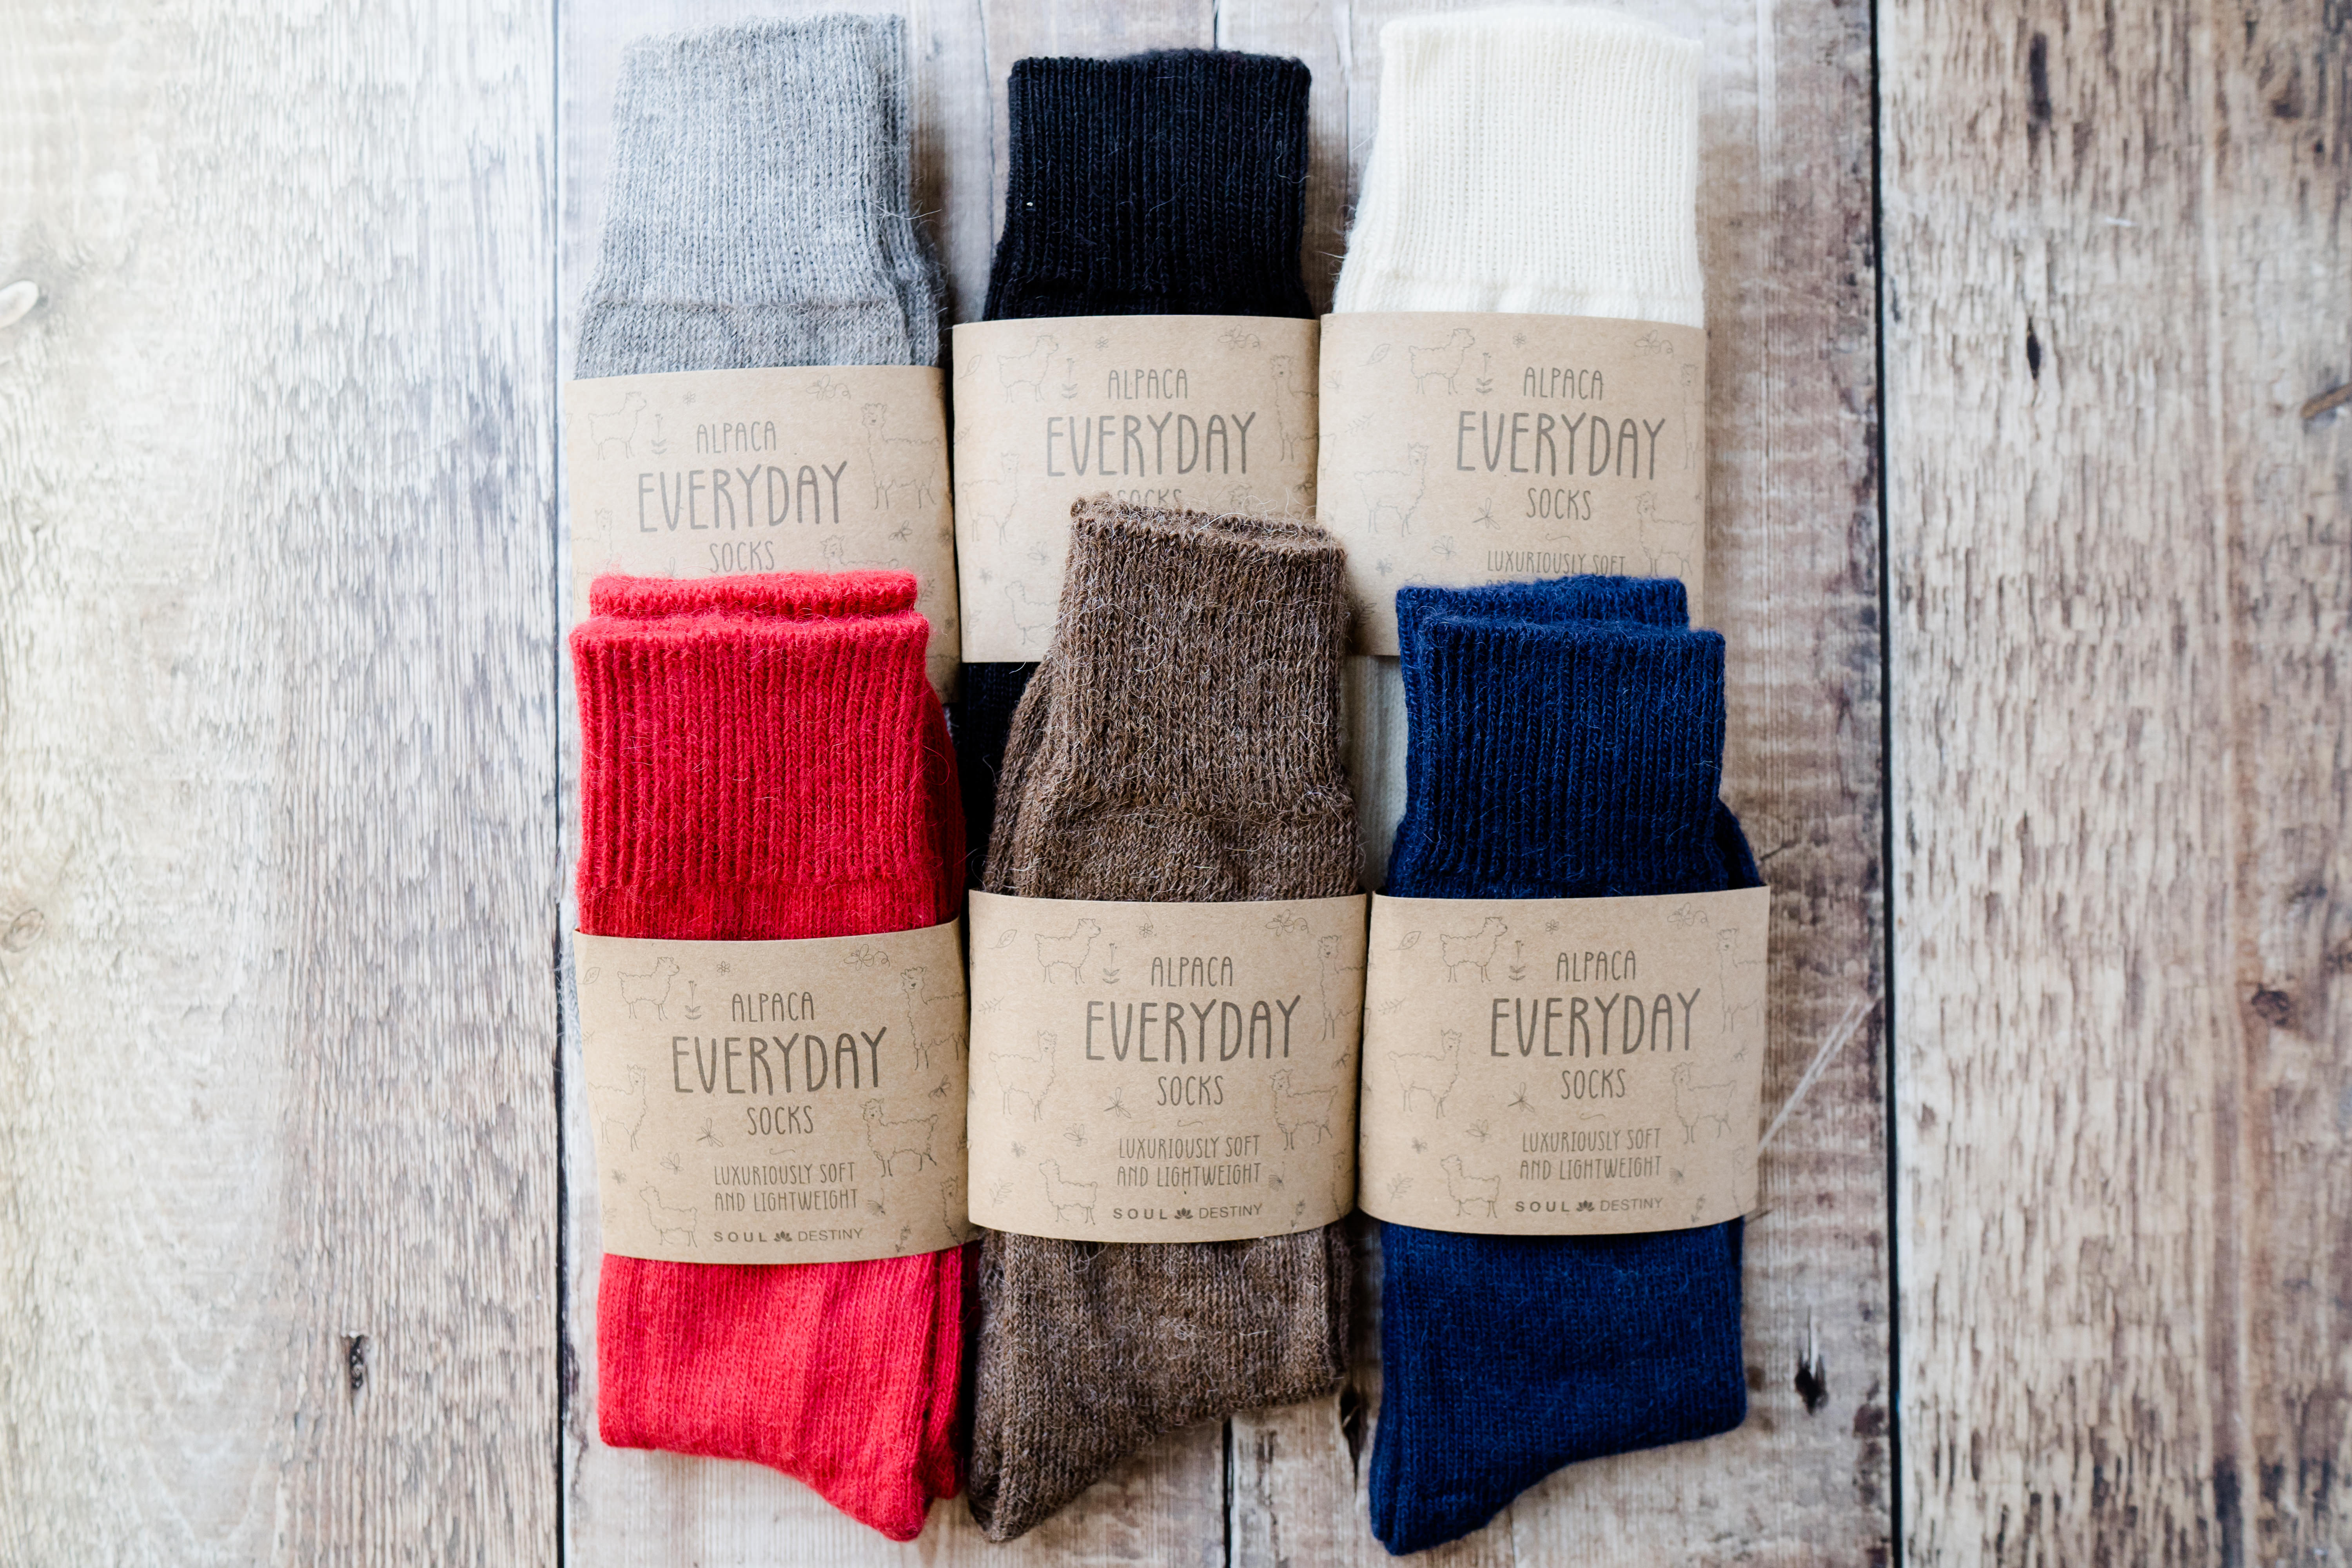 Gift Pack Idea K 6 pairs of Alpaca Every Day Socks, 55% Alpaca Wool